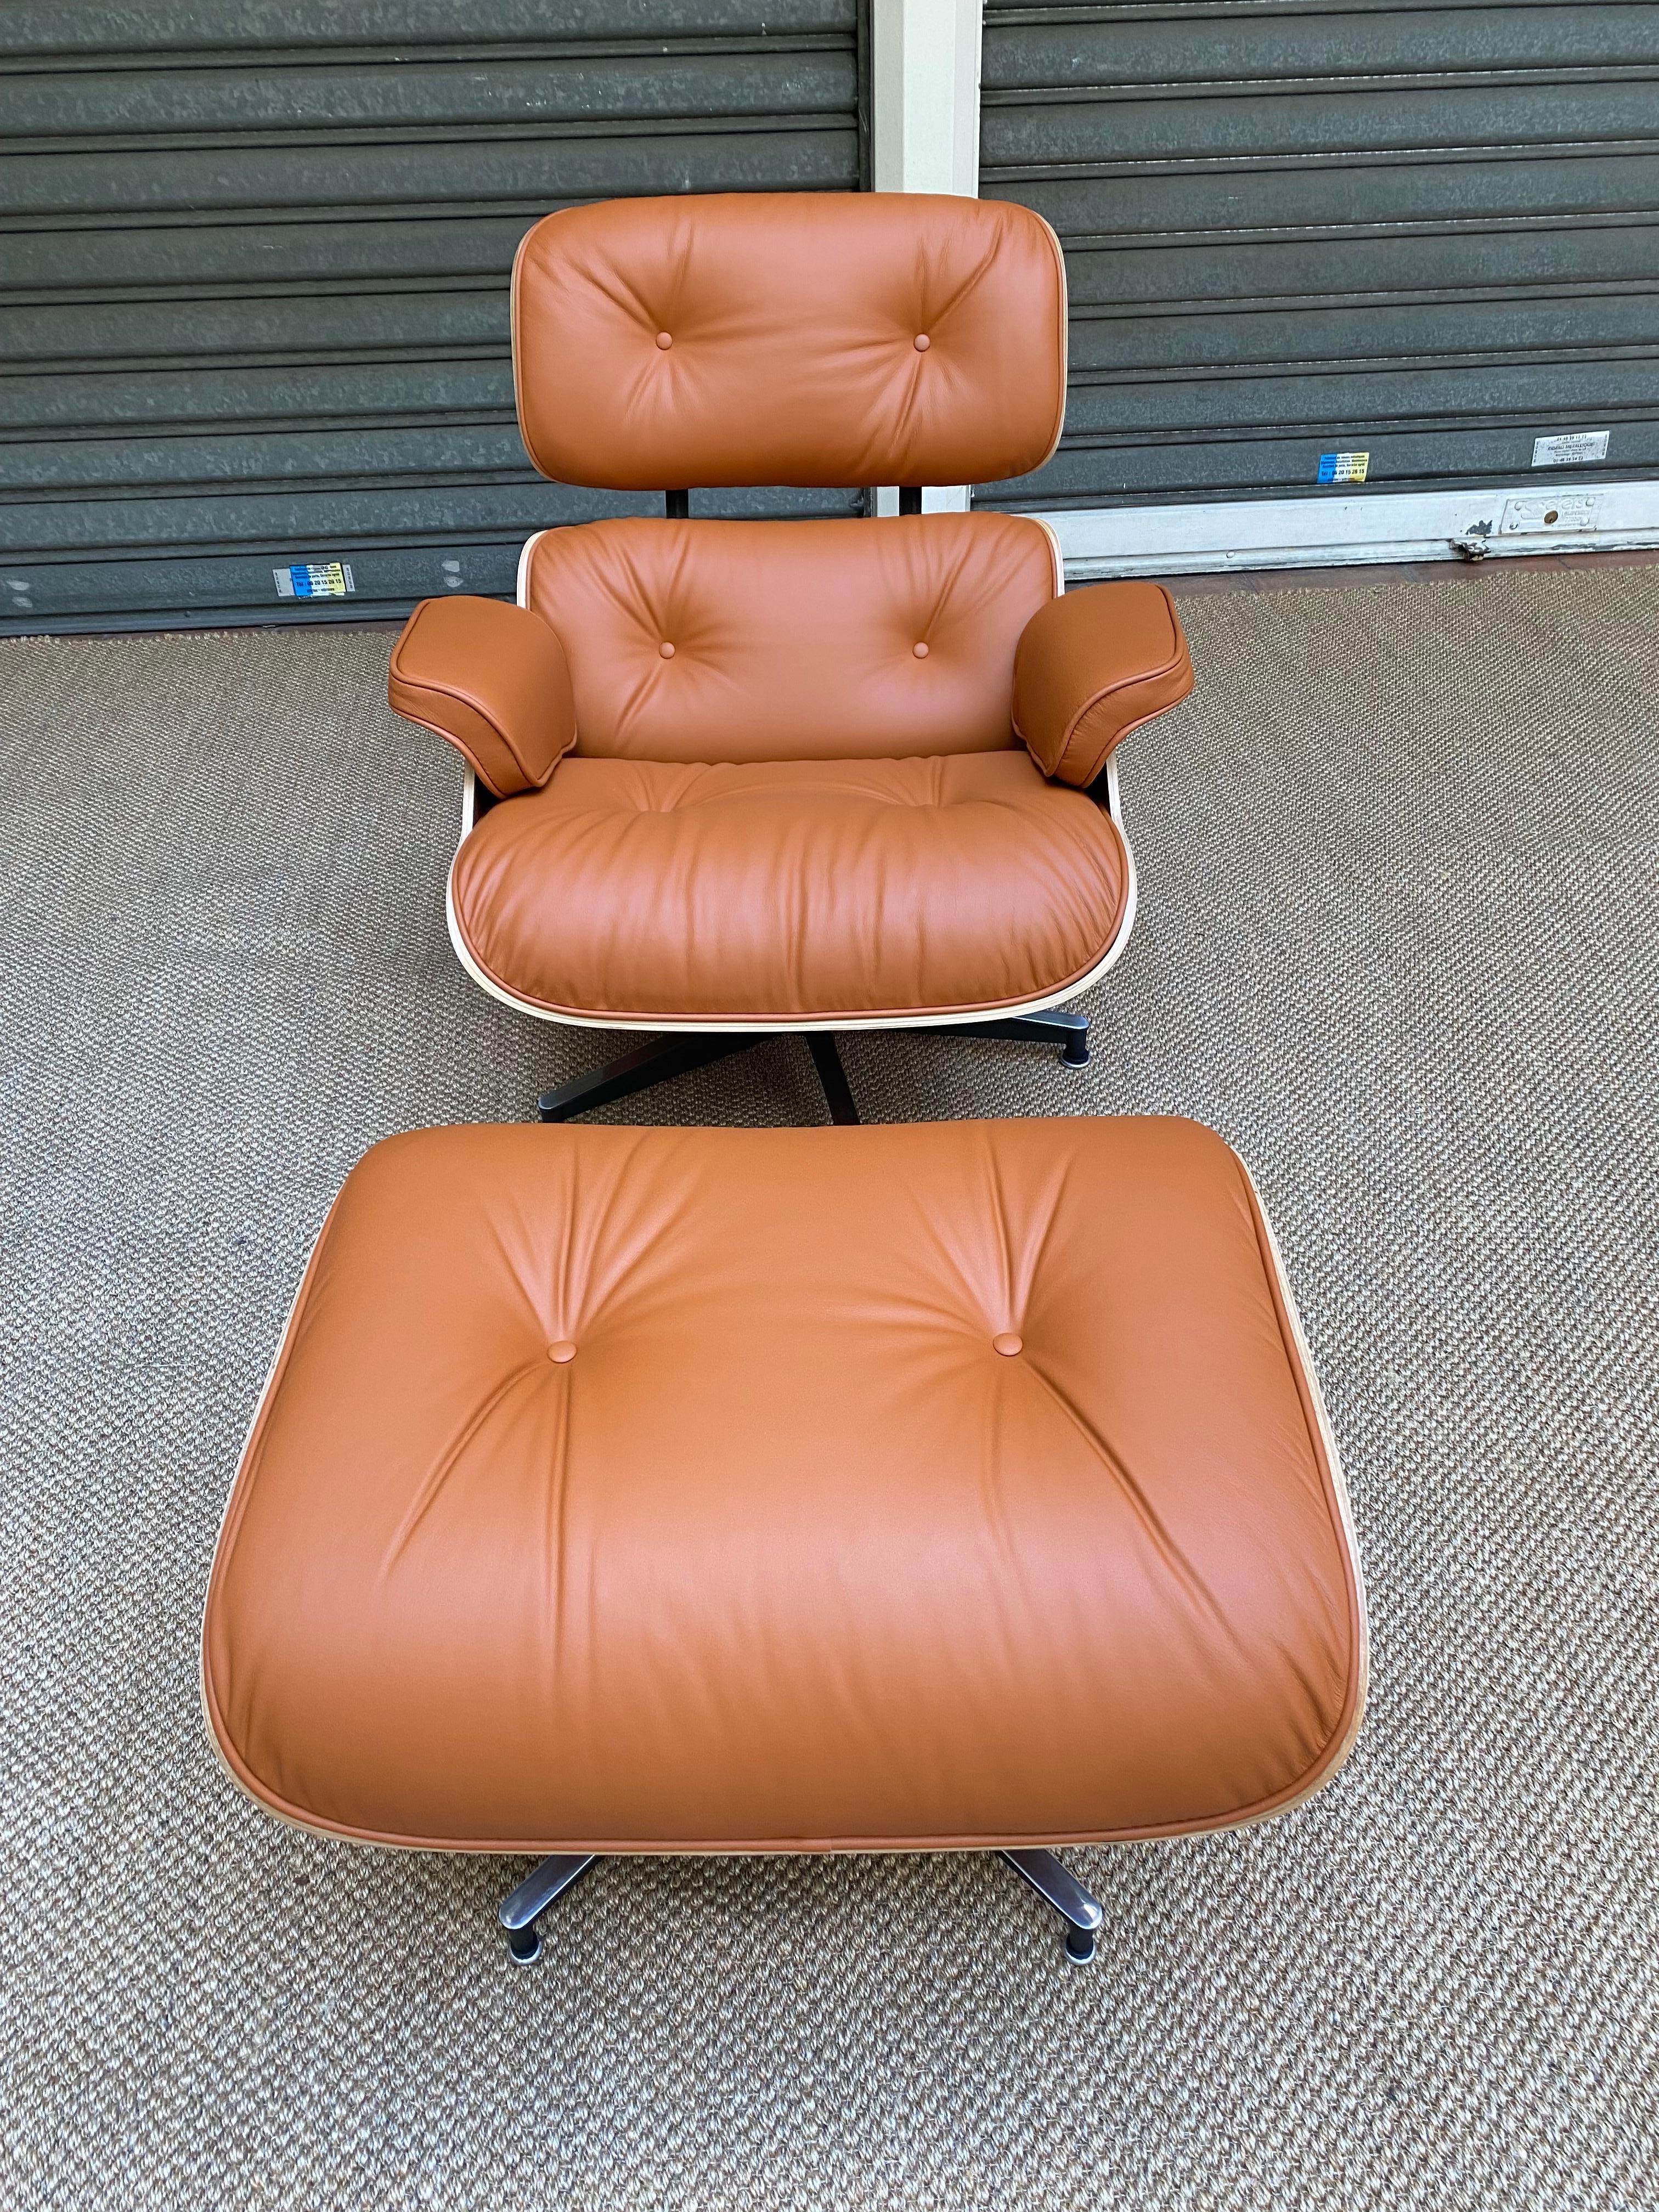 American Eames Lounge Chair et Ottoman, 2010